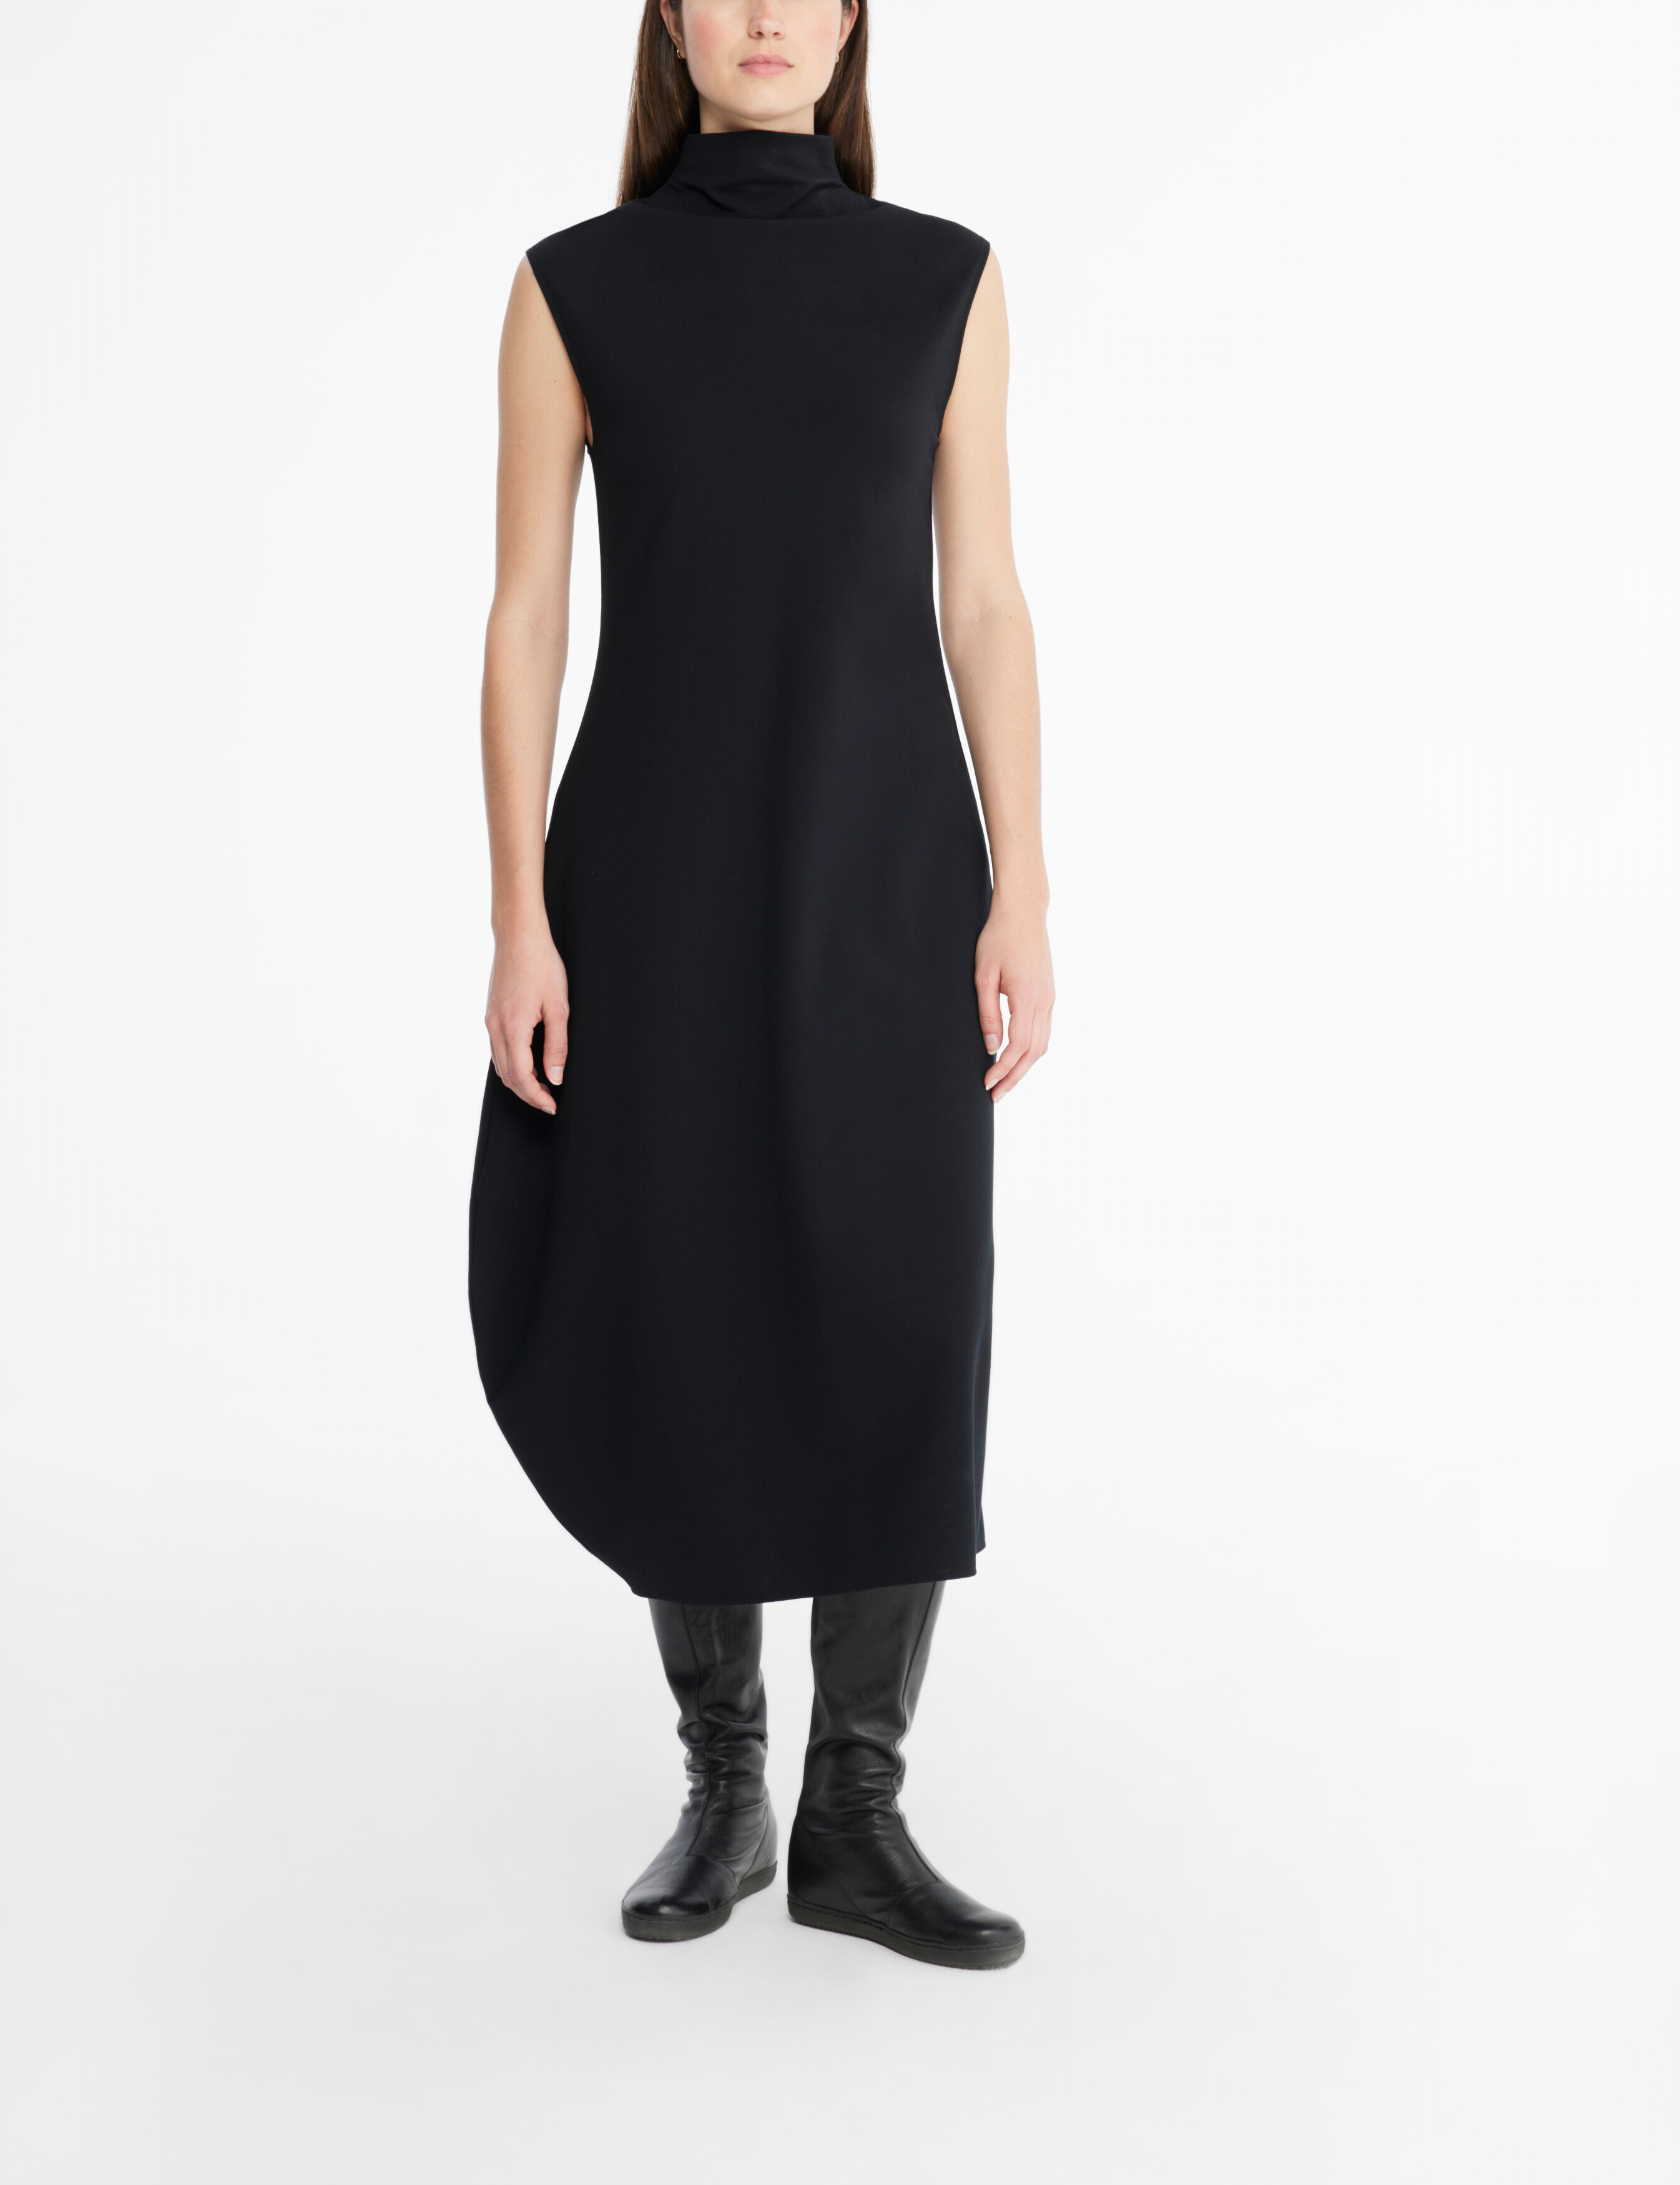 Black wrap dress - techno fabric by Sarah Pacini